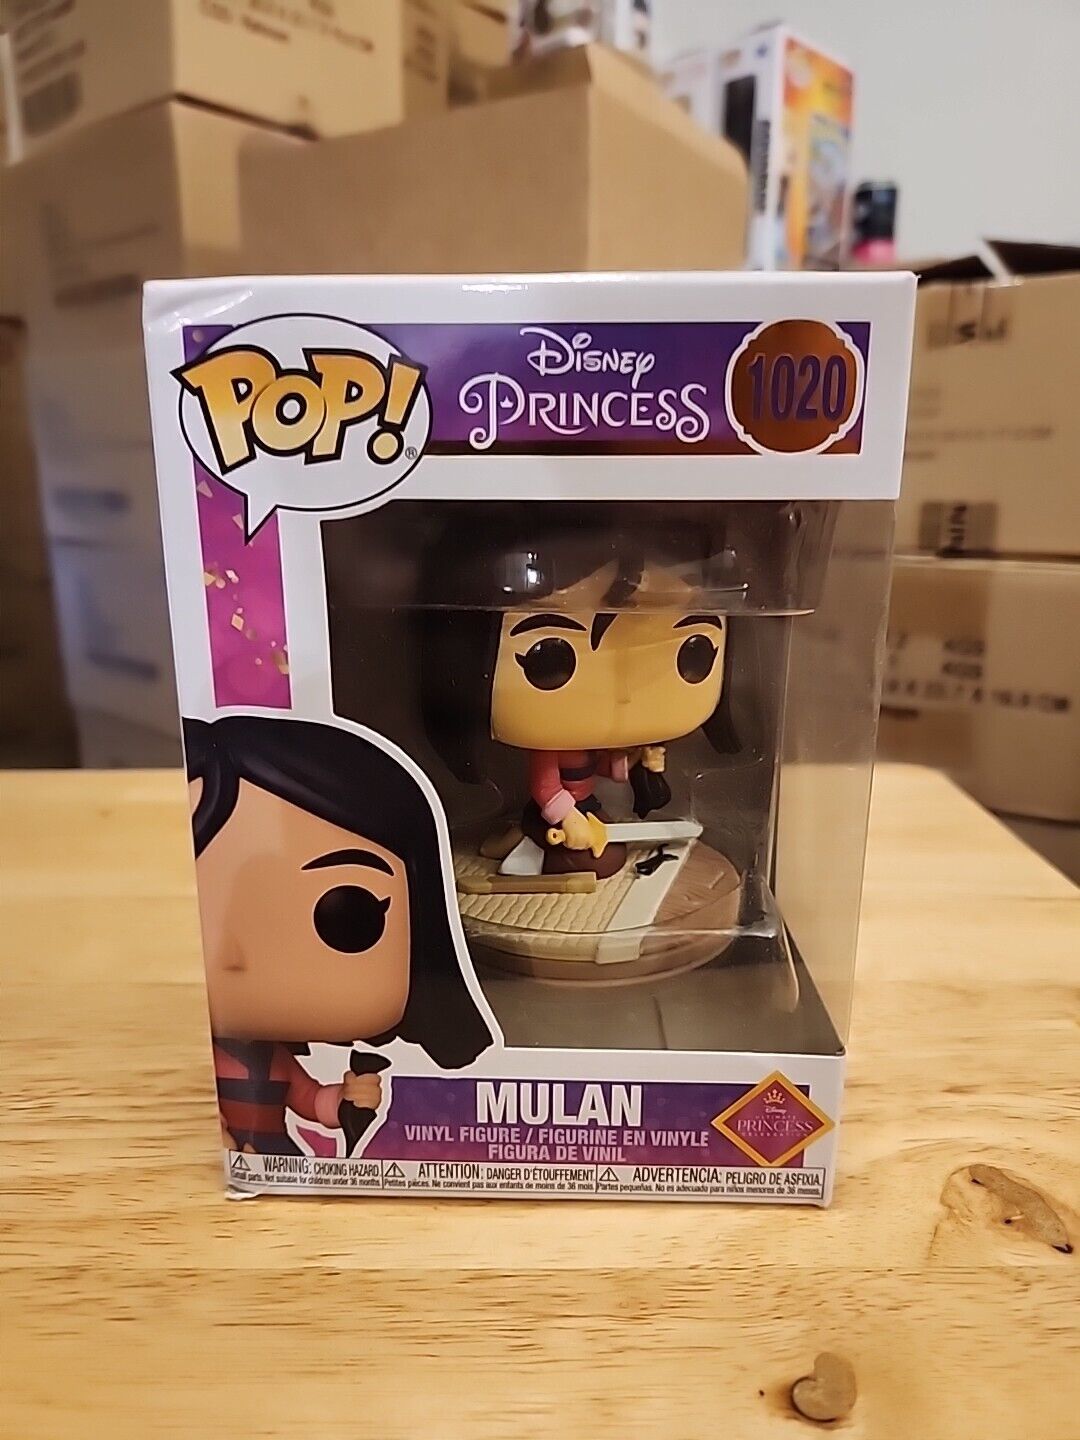 Pop Disney Ultimate Princess Mulan Vinyl Figure Box Damage AMAZON RETURNS